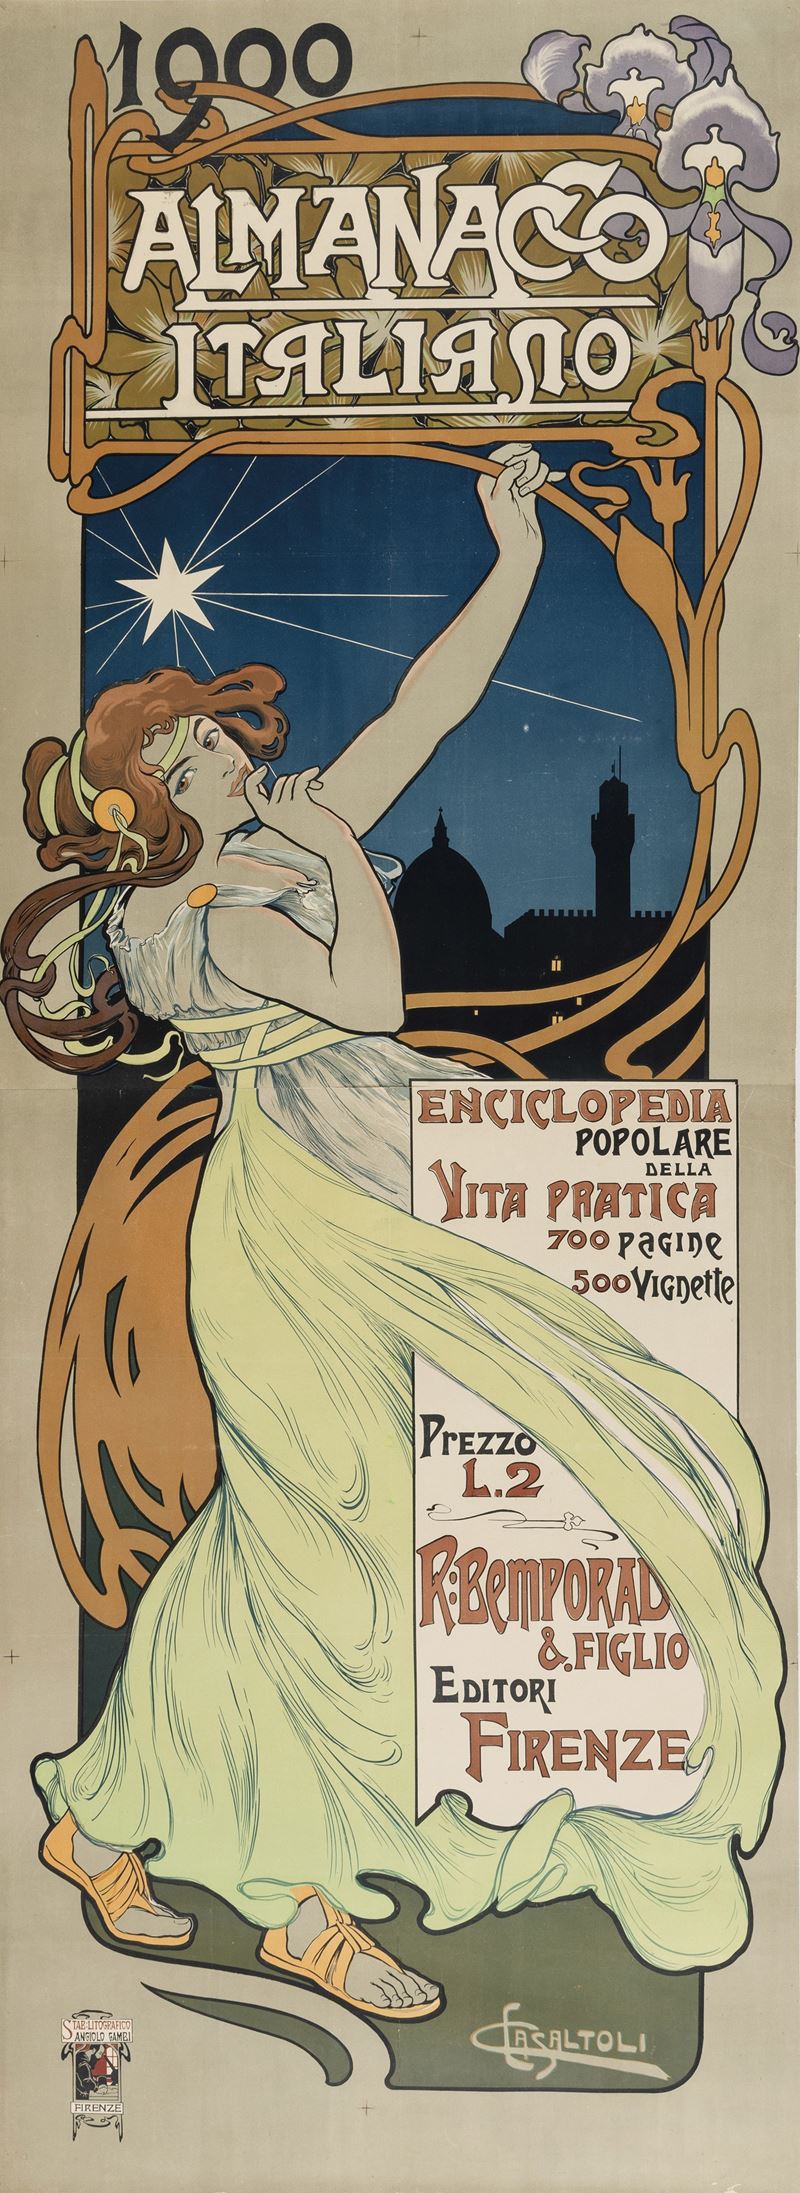 Carlo Casaltoli : 1900 Almanacco Italiano  - Asta Manifesti d'Epoca - Cambi Casa d'Aste